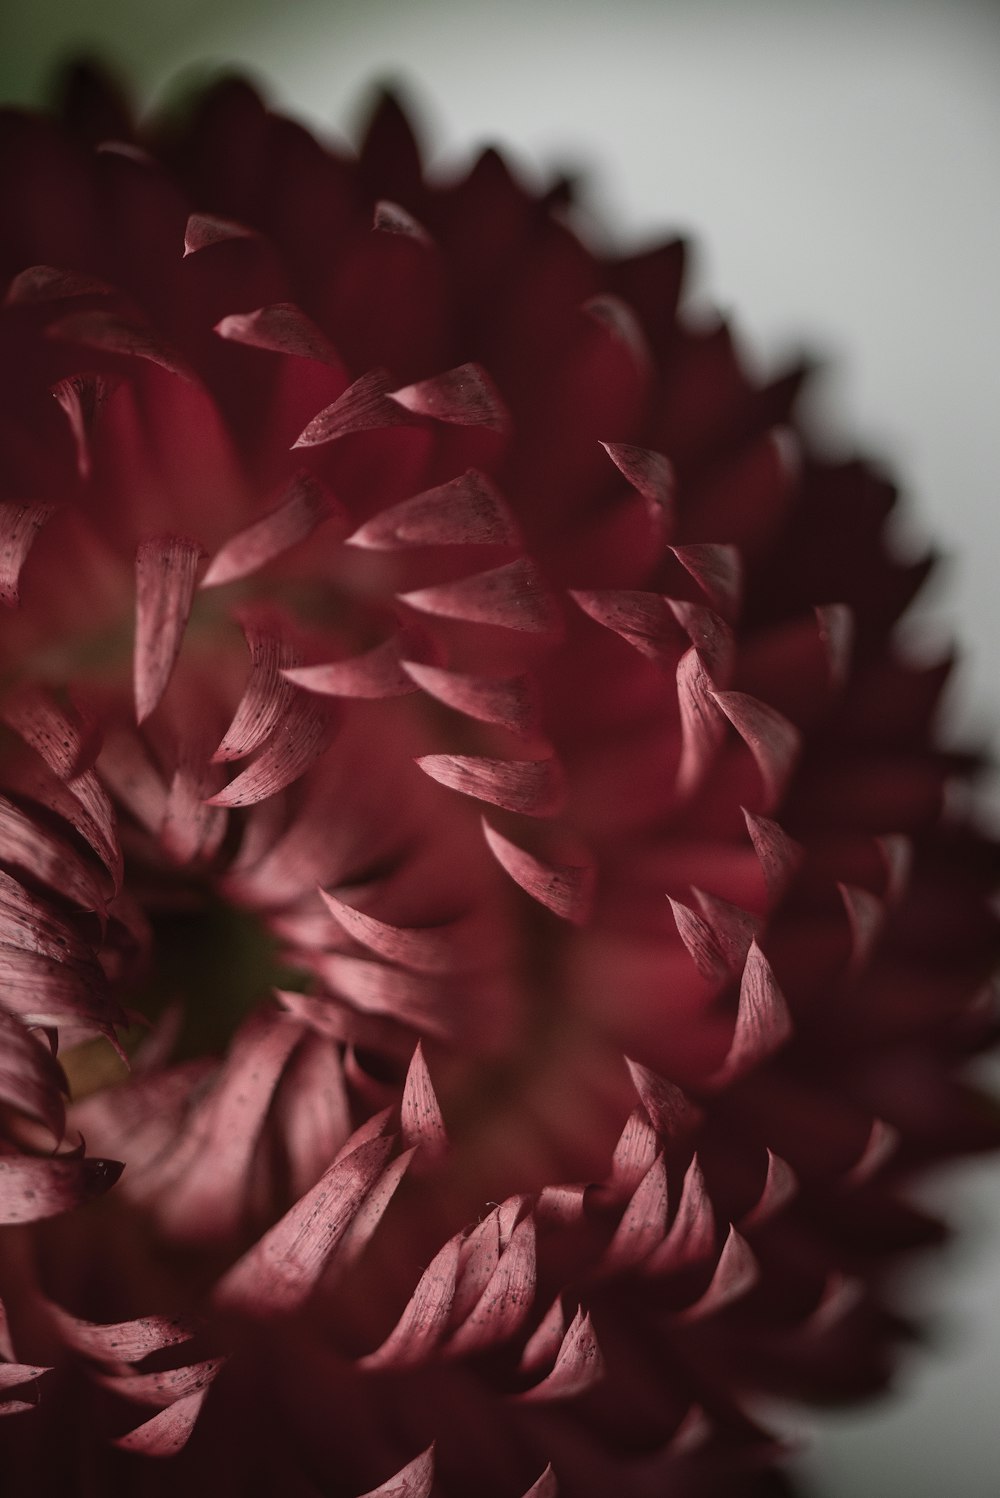 tilt shift lens photography of red flower petal